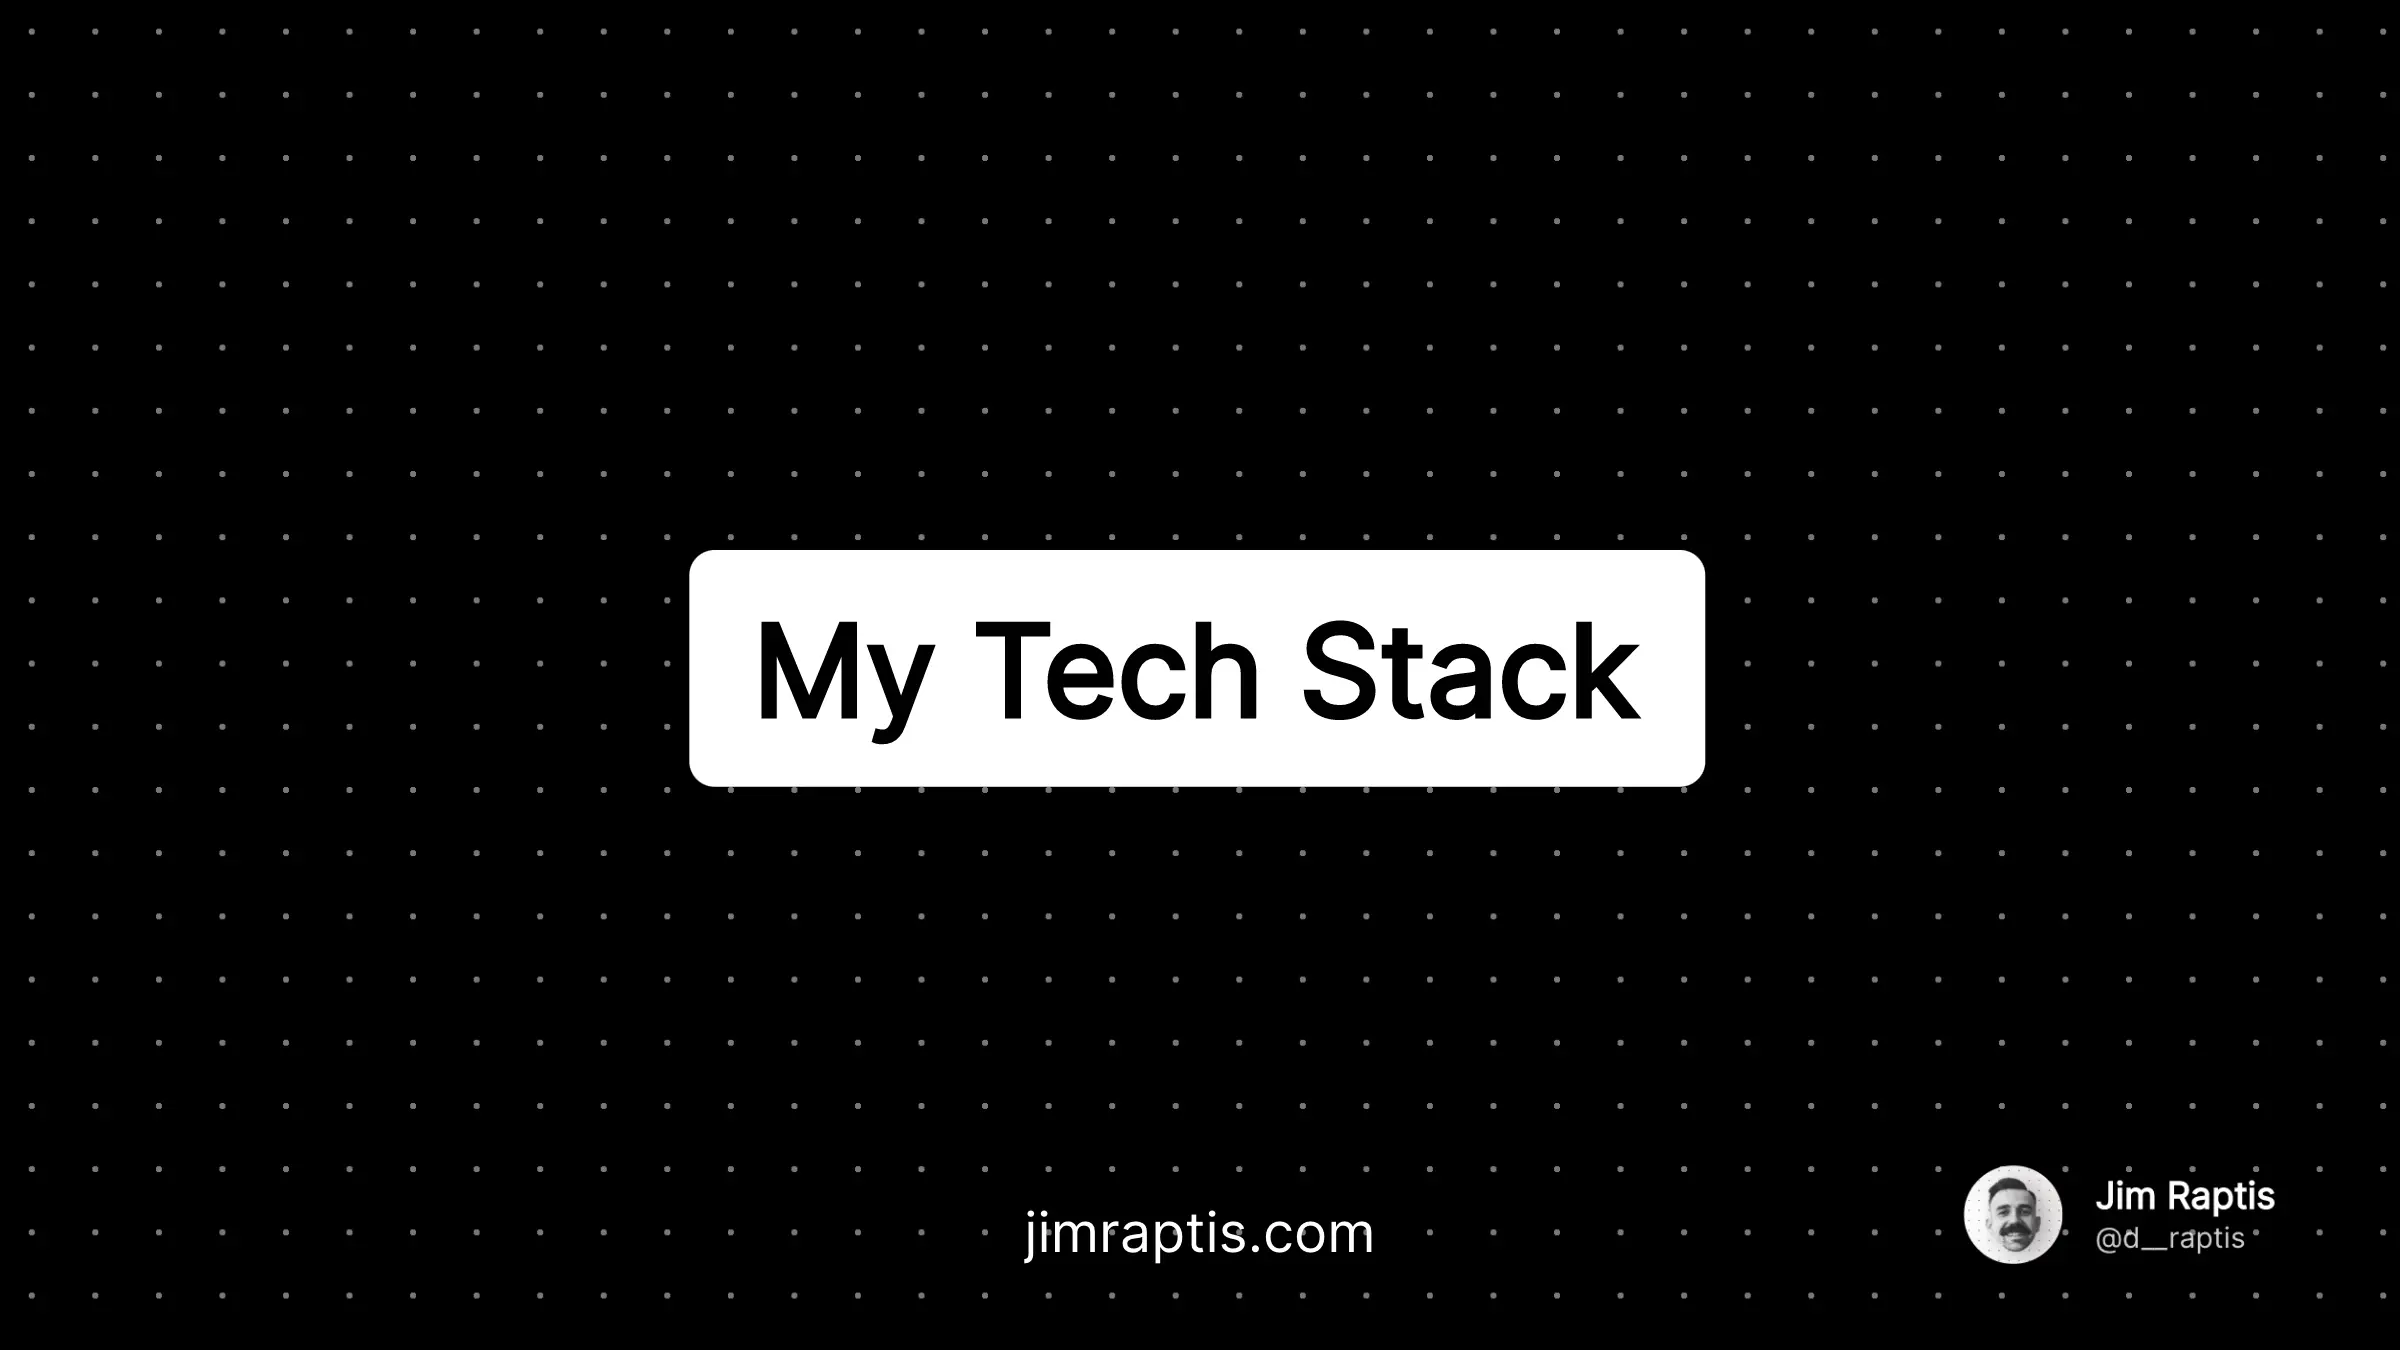 My SaaS tech stack